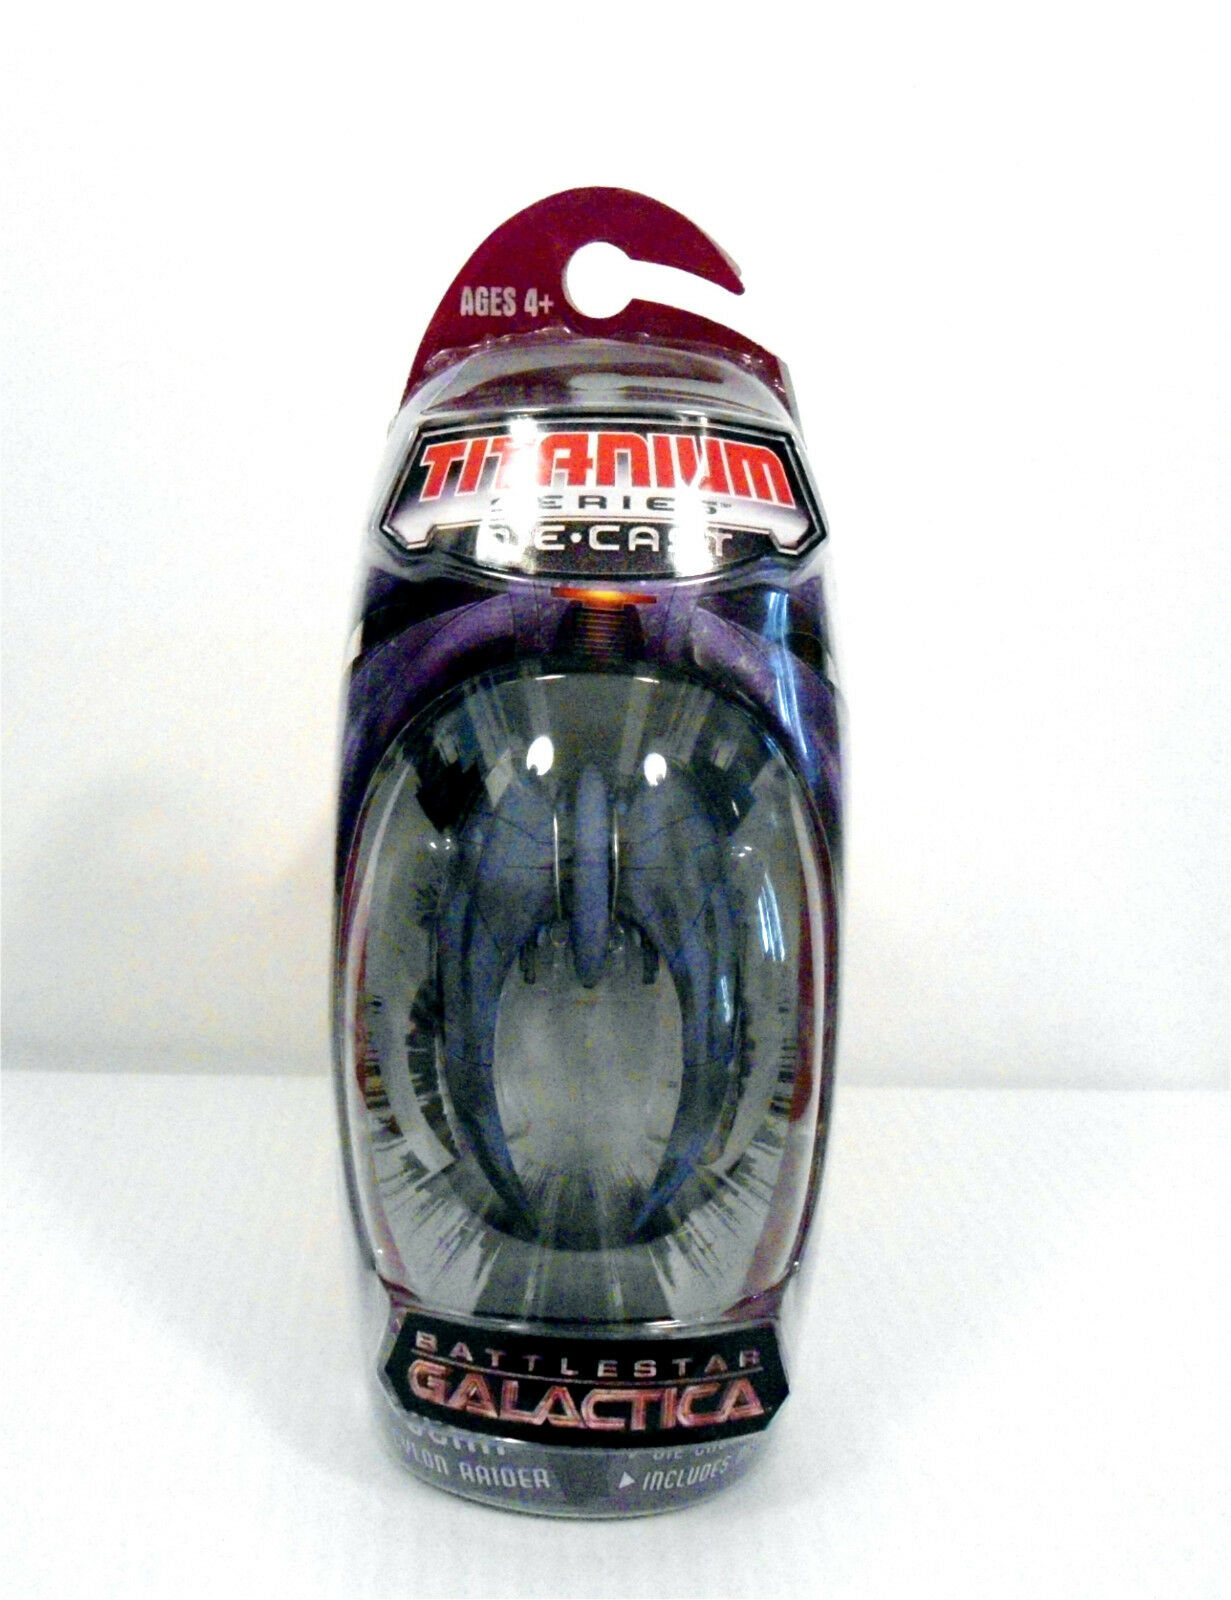 Battlestar Galactica Titanium Series Cylon Raider "scar" Mint In Box